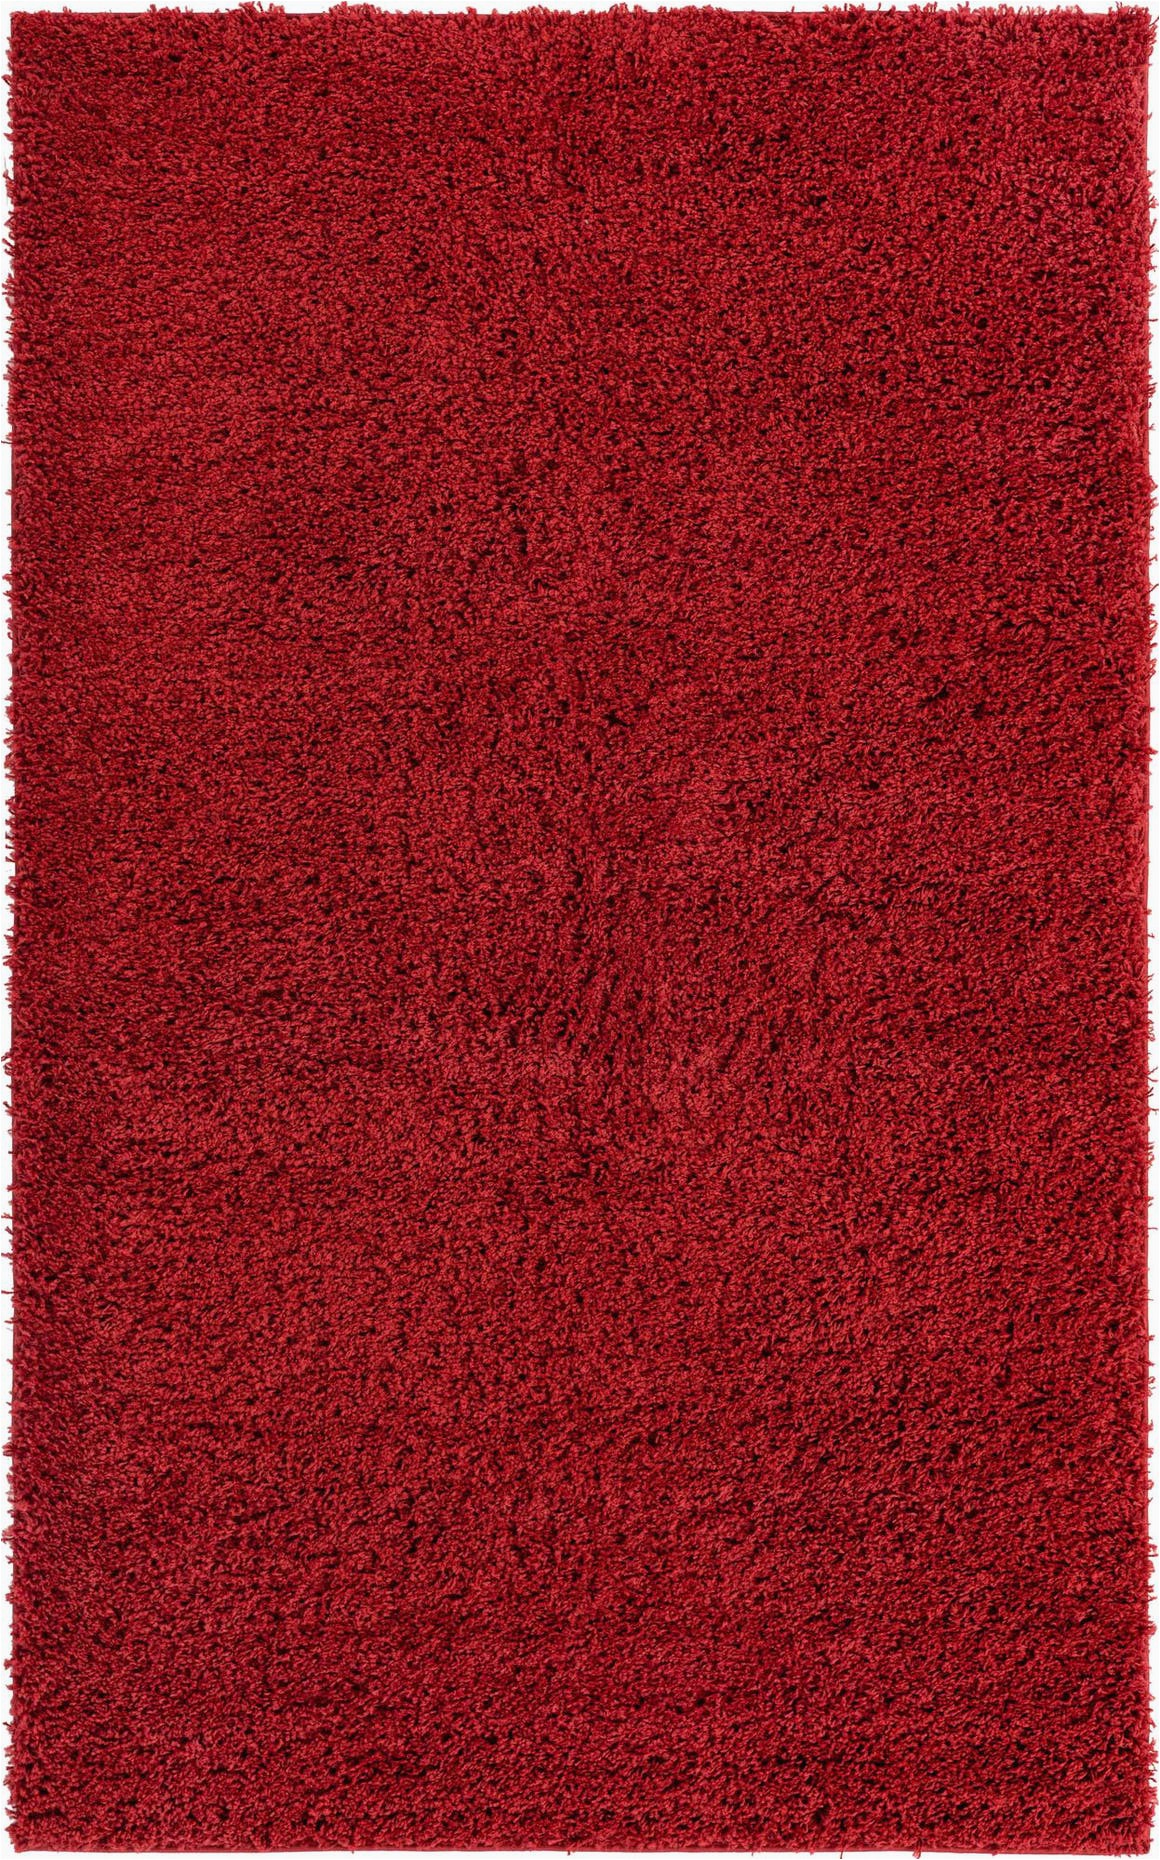 cherry red 5x8 everyday shag area rug